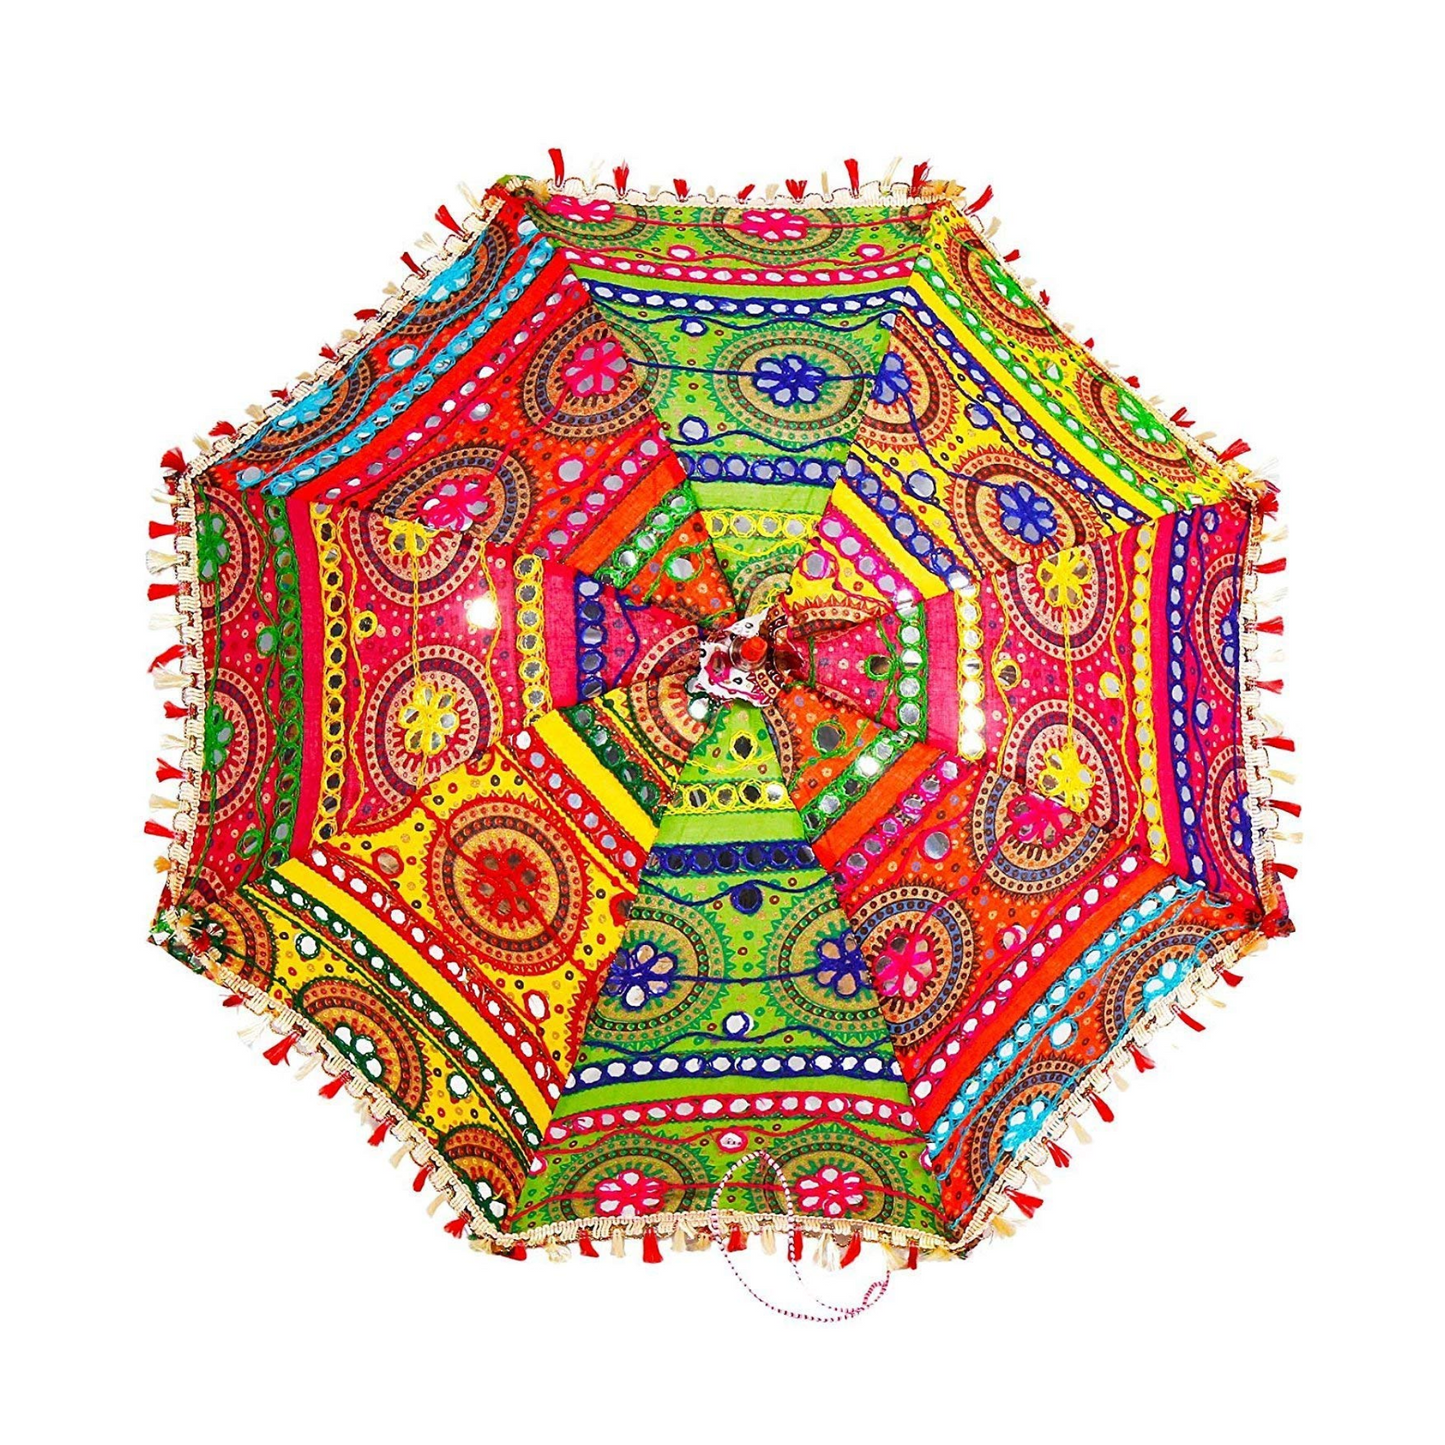 Rajasthani Wedding Umbrella, Jaipuri Embroidery Umbrella for Wedding Decoration Colour & Design May Vary